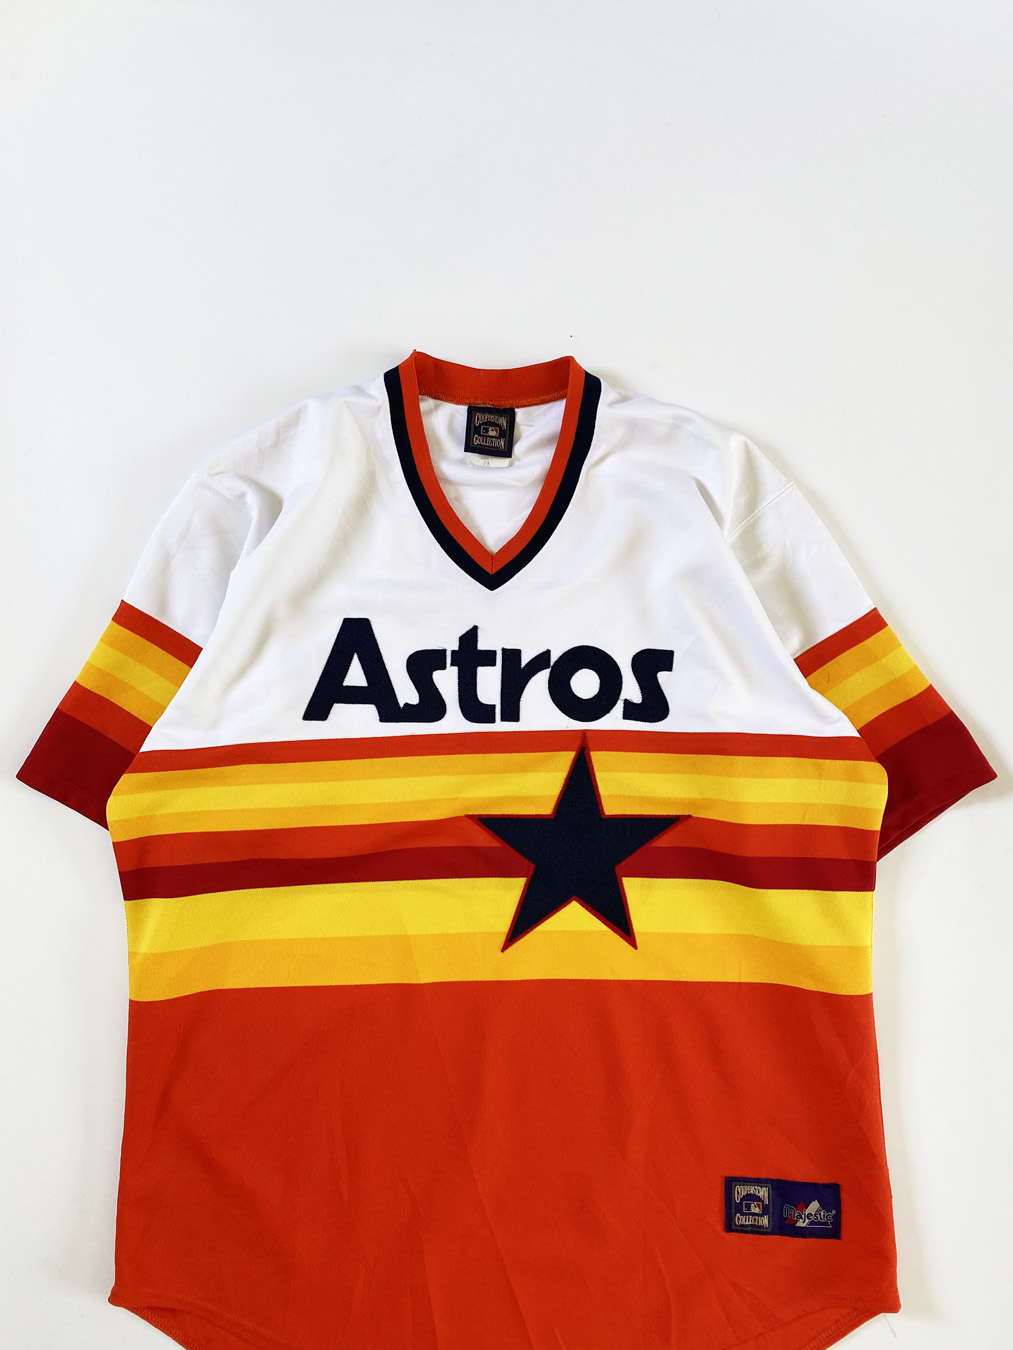 astros retro rainbow jersey